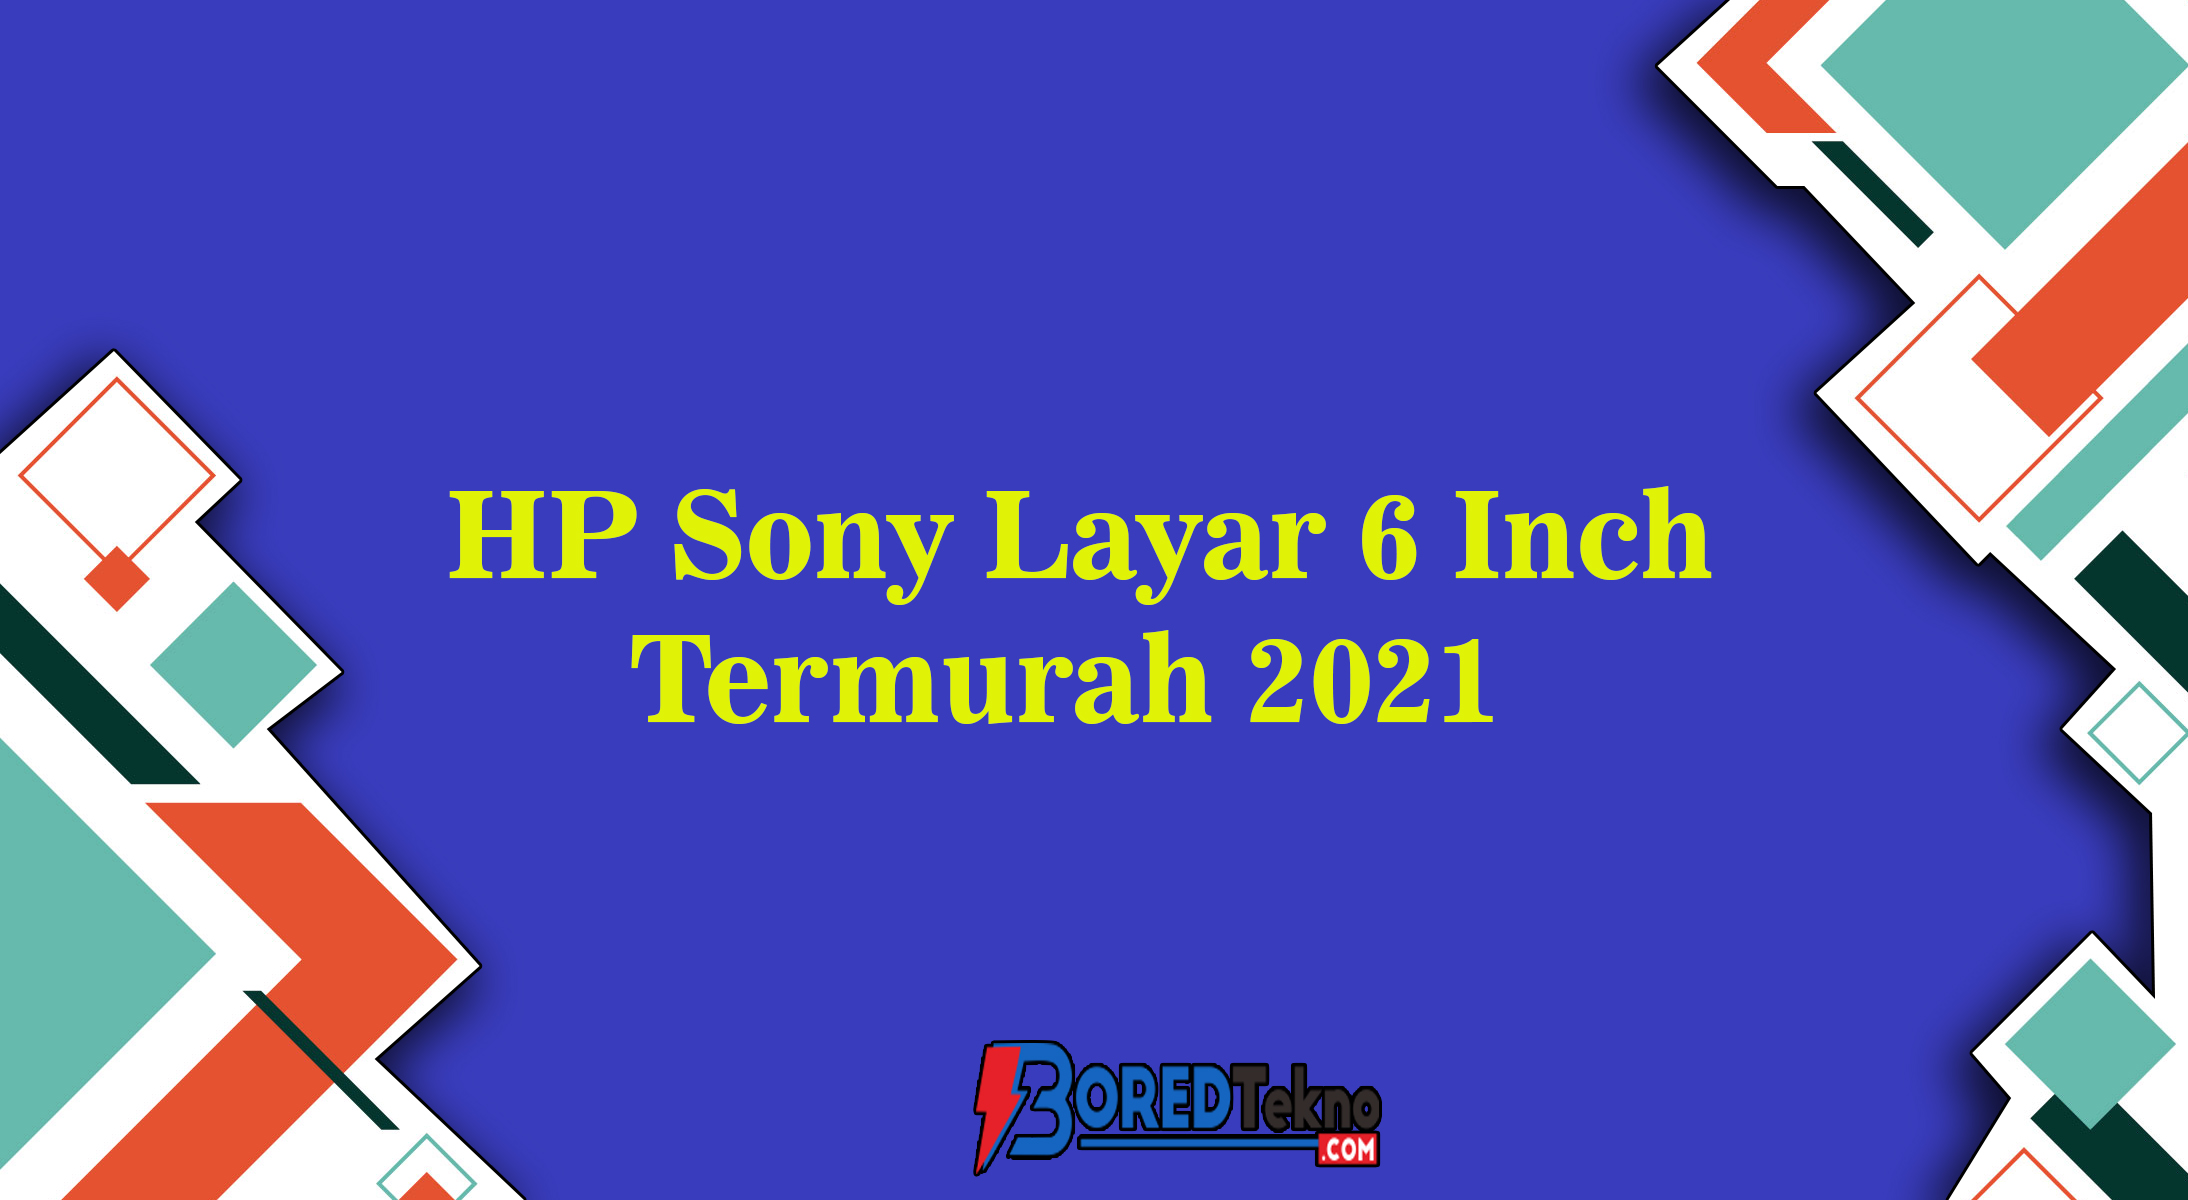 HP Sony Layar 6 Inch Termurah 2021 